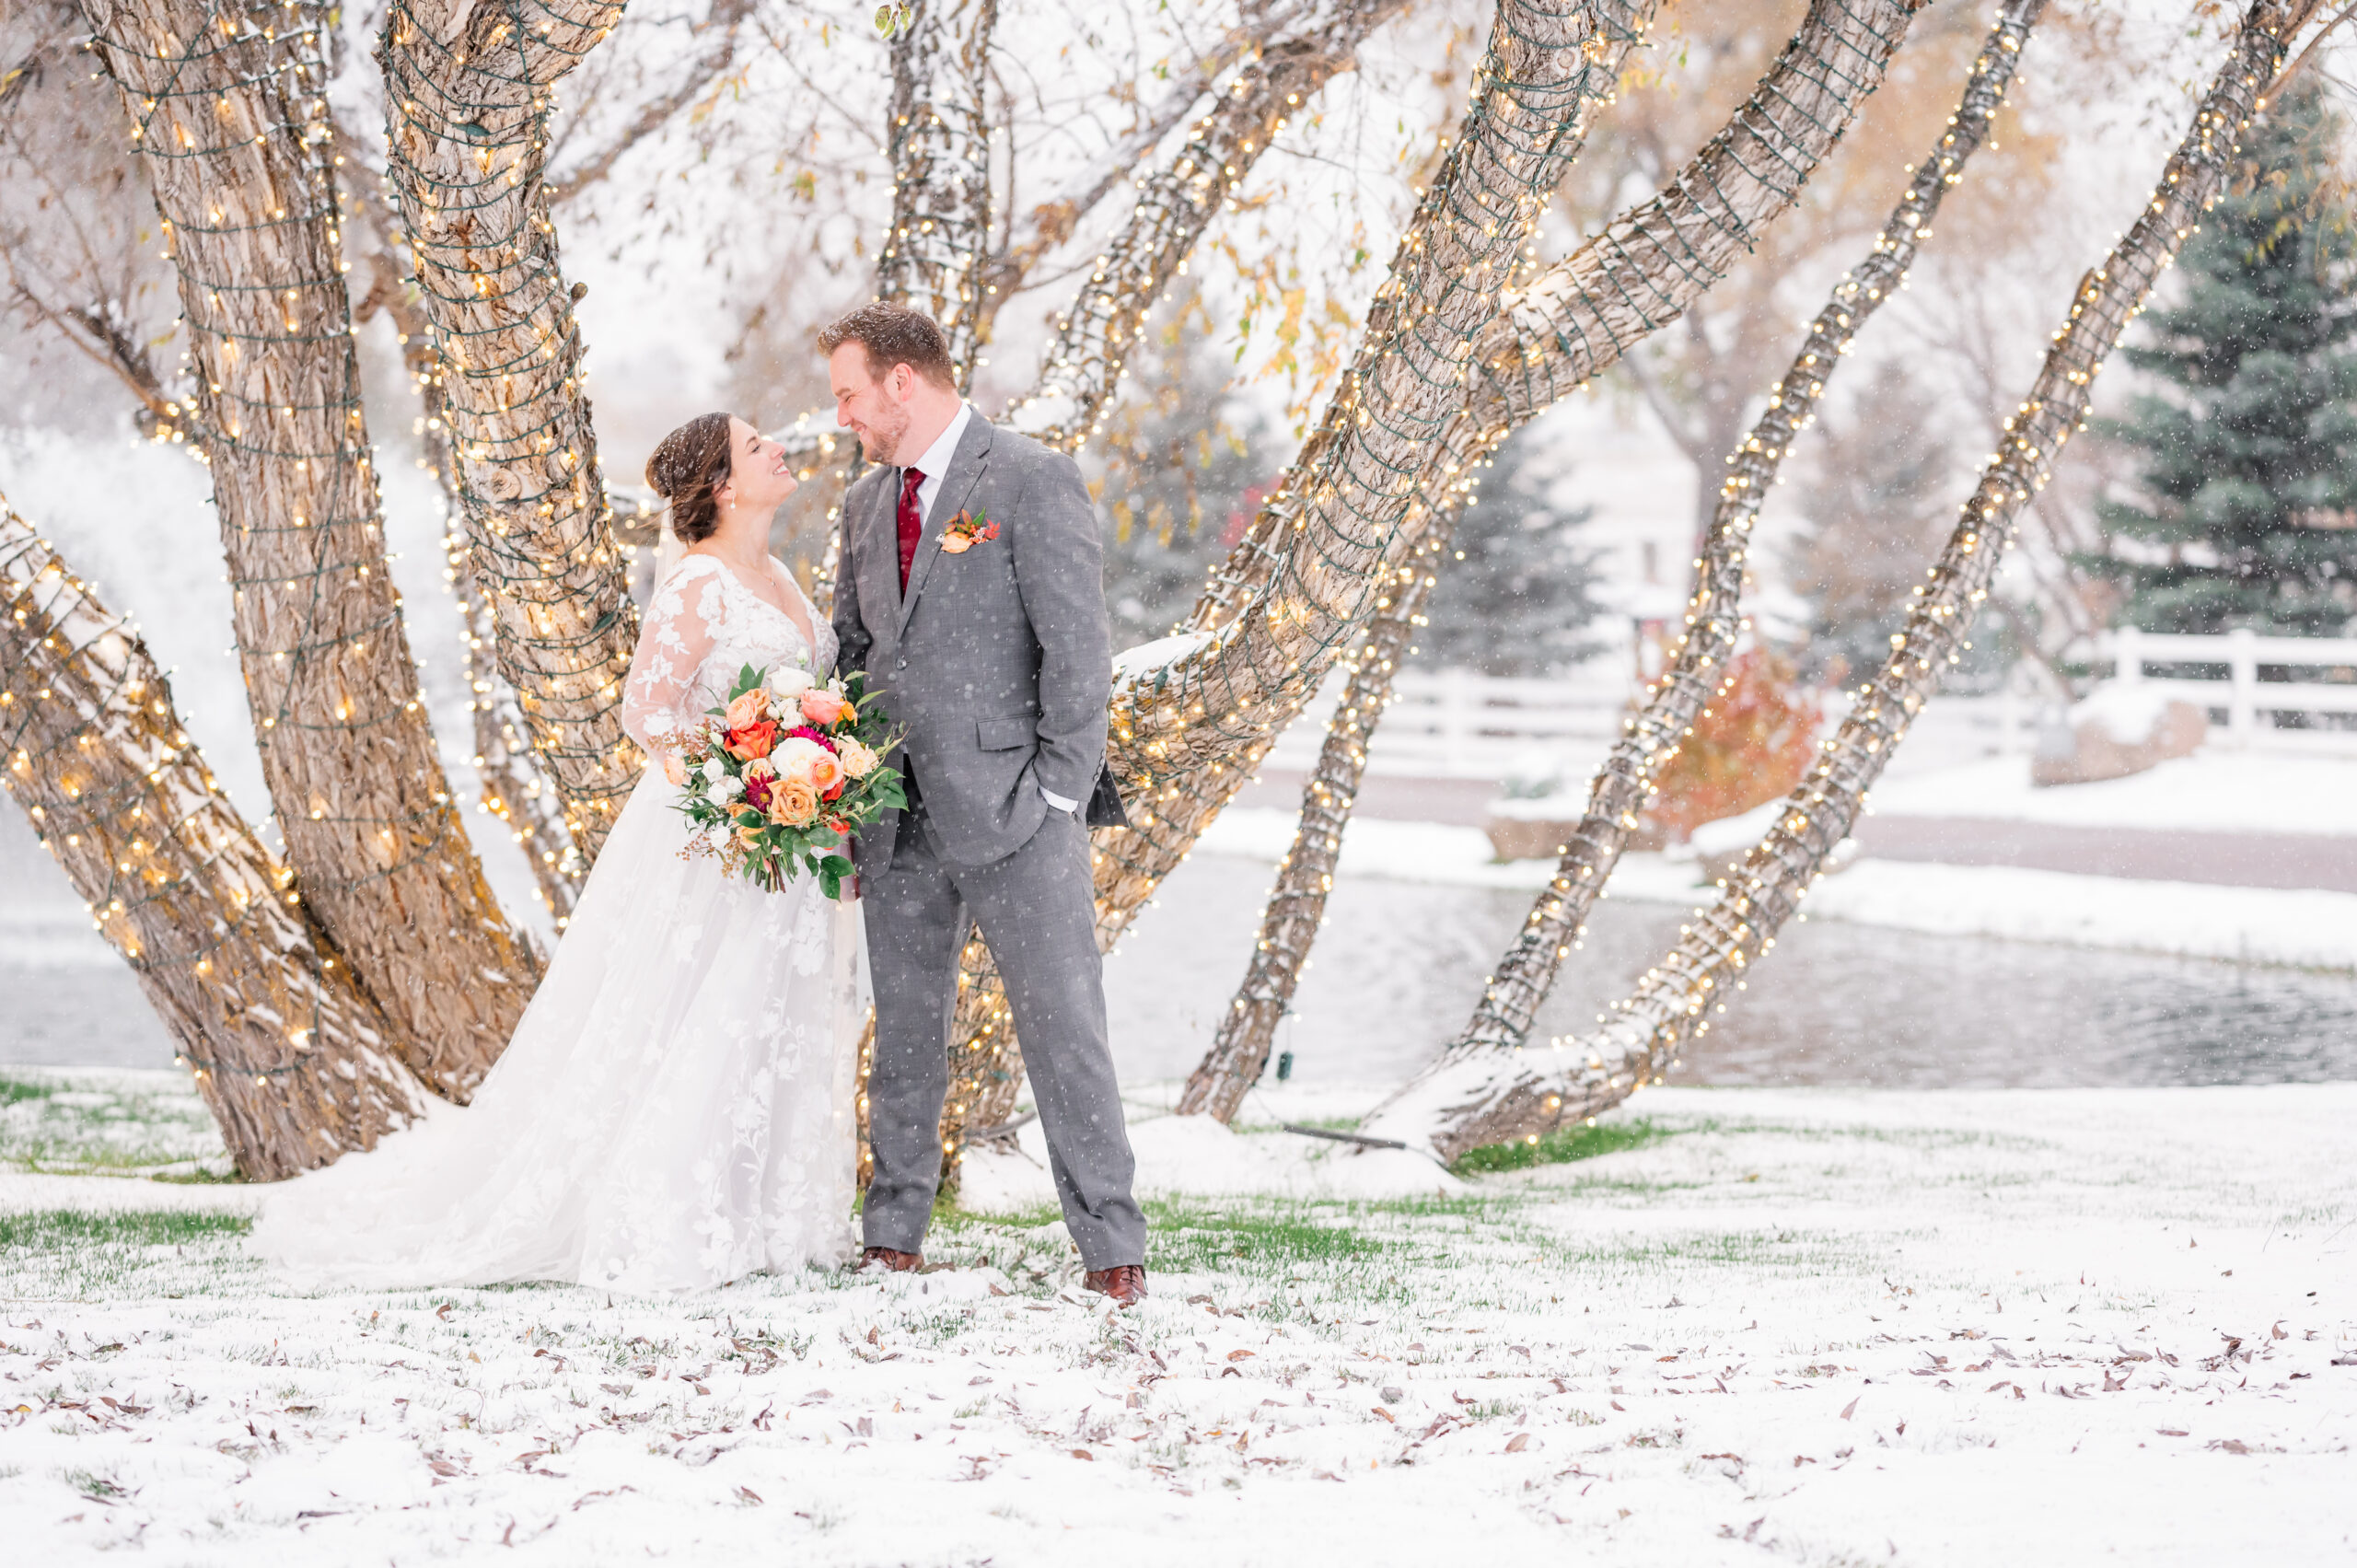 Sarah + Zach Wedding Fall Wedding Turned Winter Fairytale at Crooked Willow - Britni Girard Photography - Colorado Wedding Photography and Videography